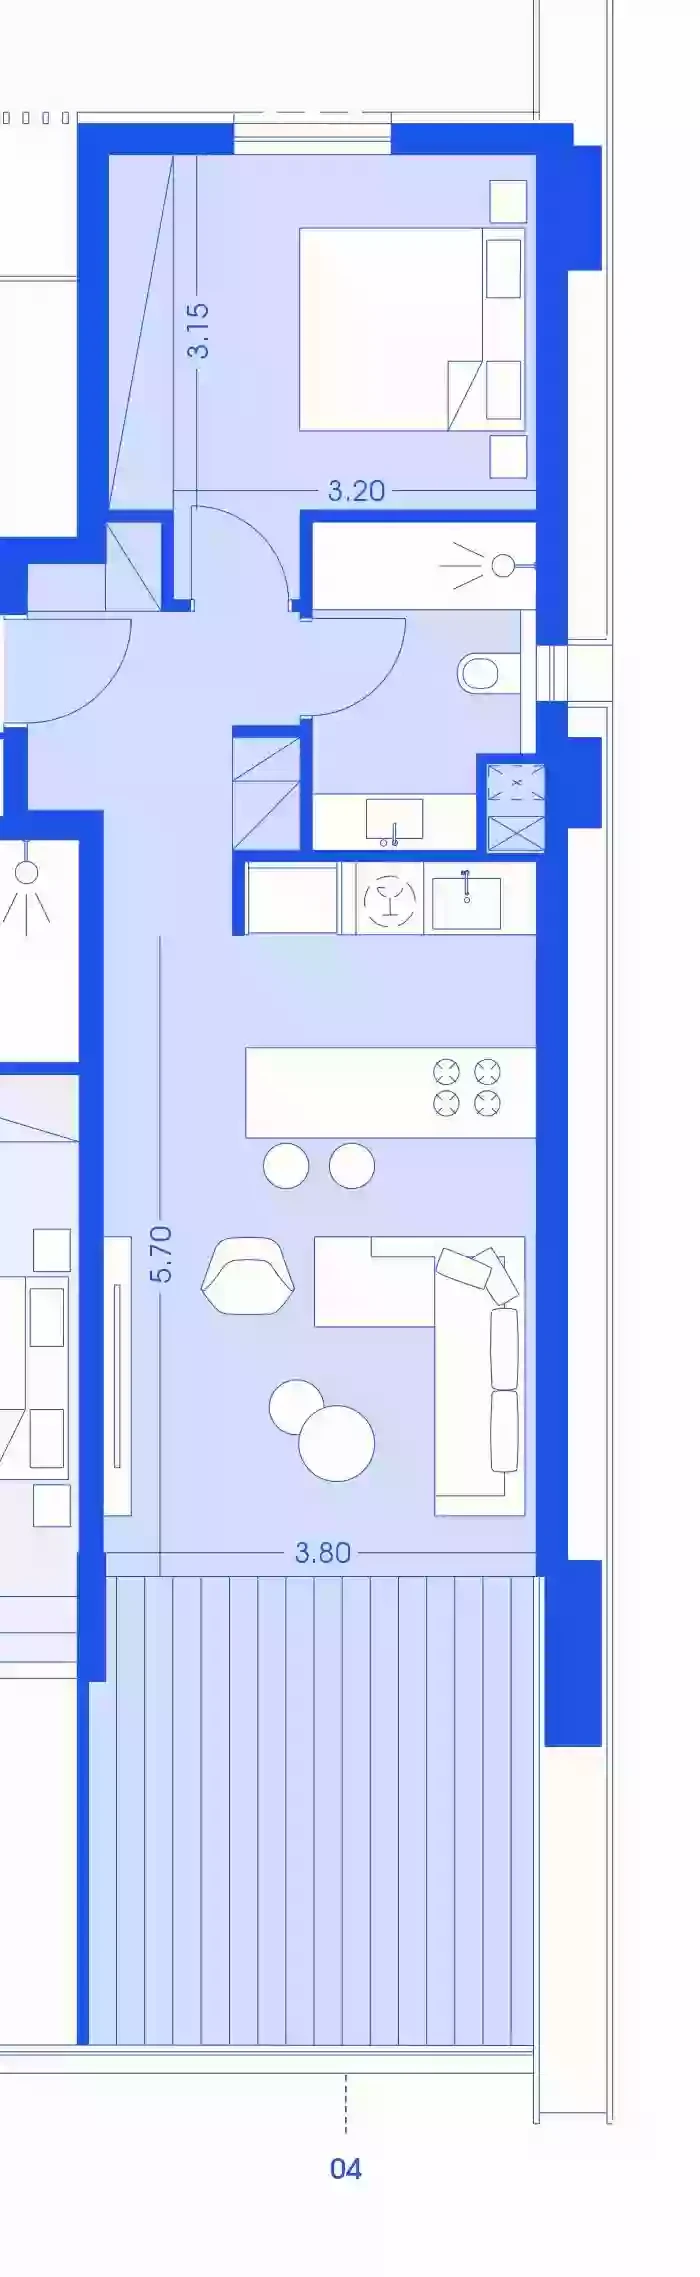 1 bedrooms, 57 sq.m., image 1